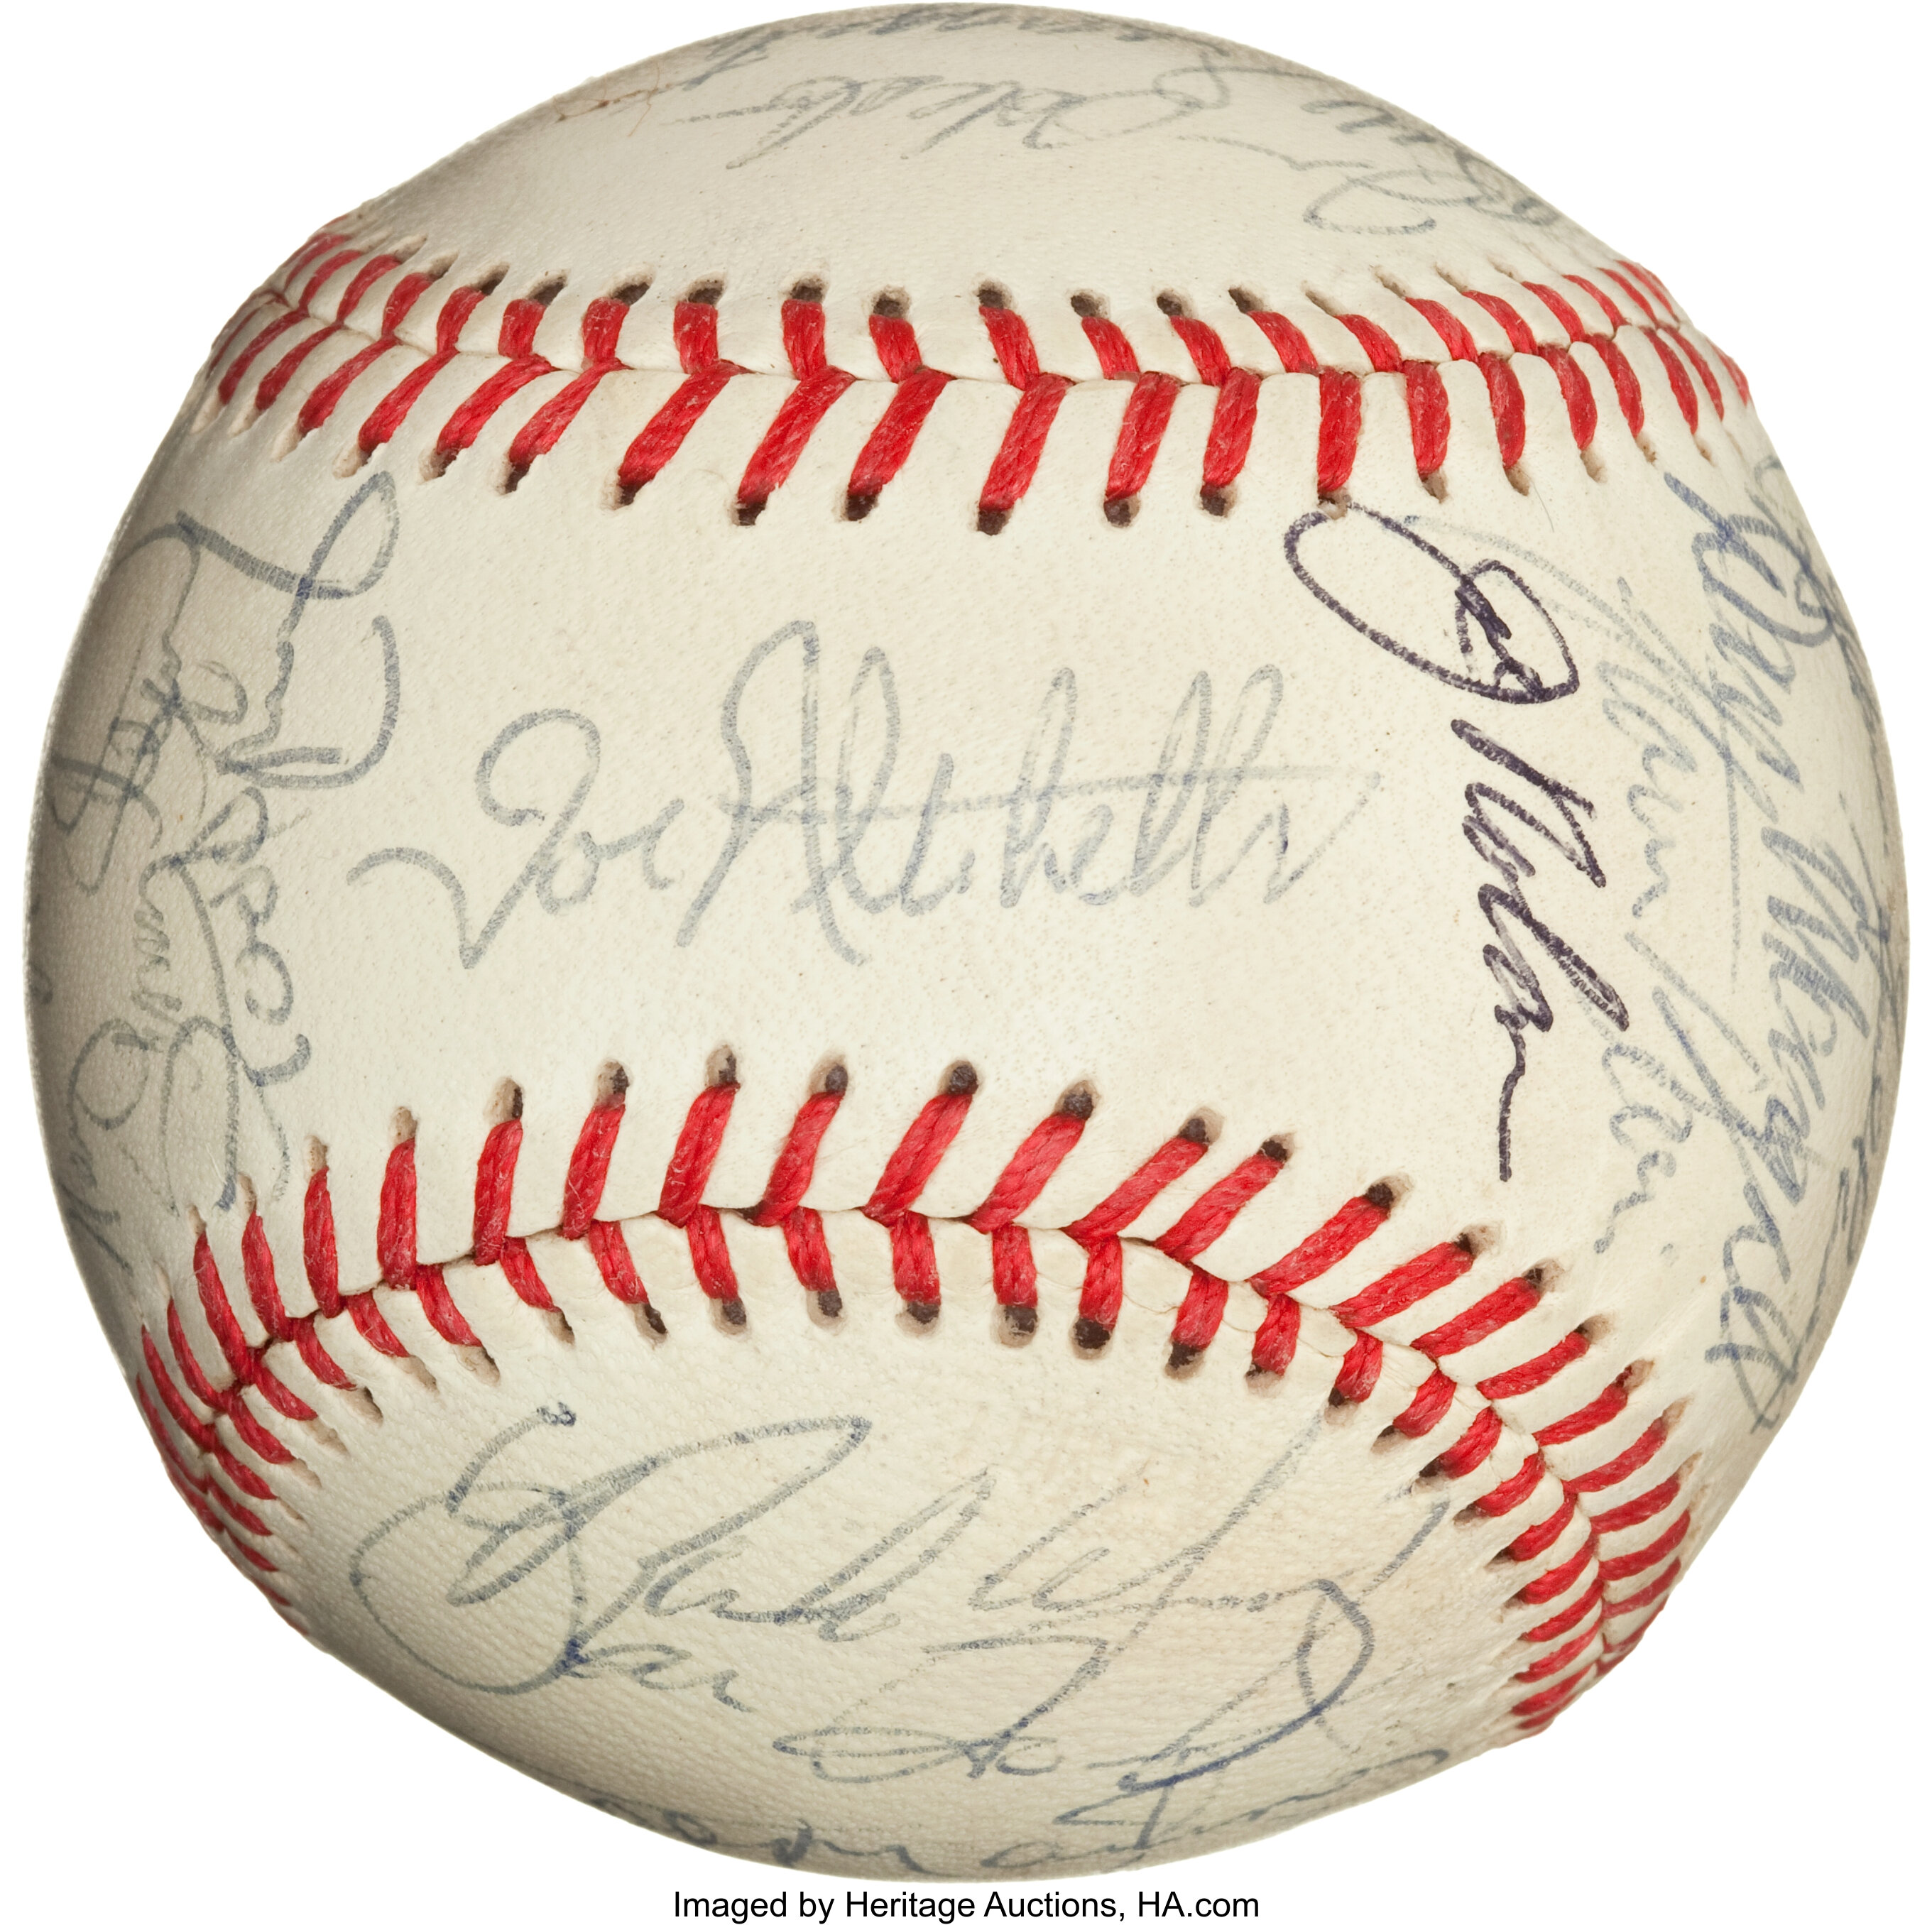 1983 Baltimore Orioles Team Signed Baseball (28 Signatures